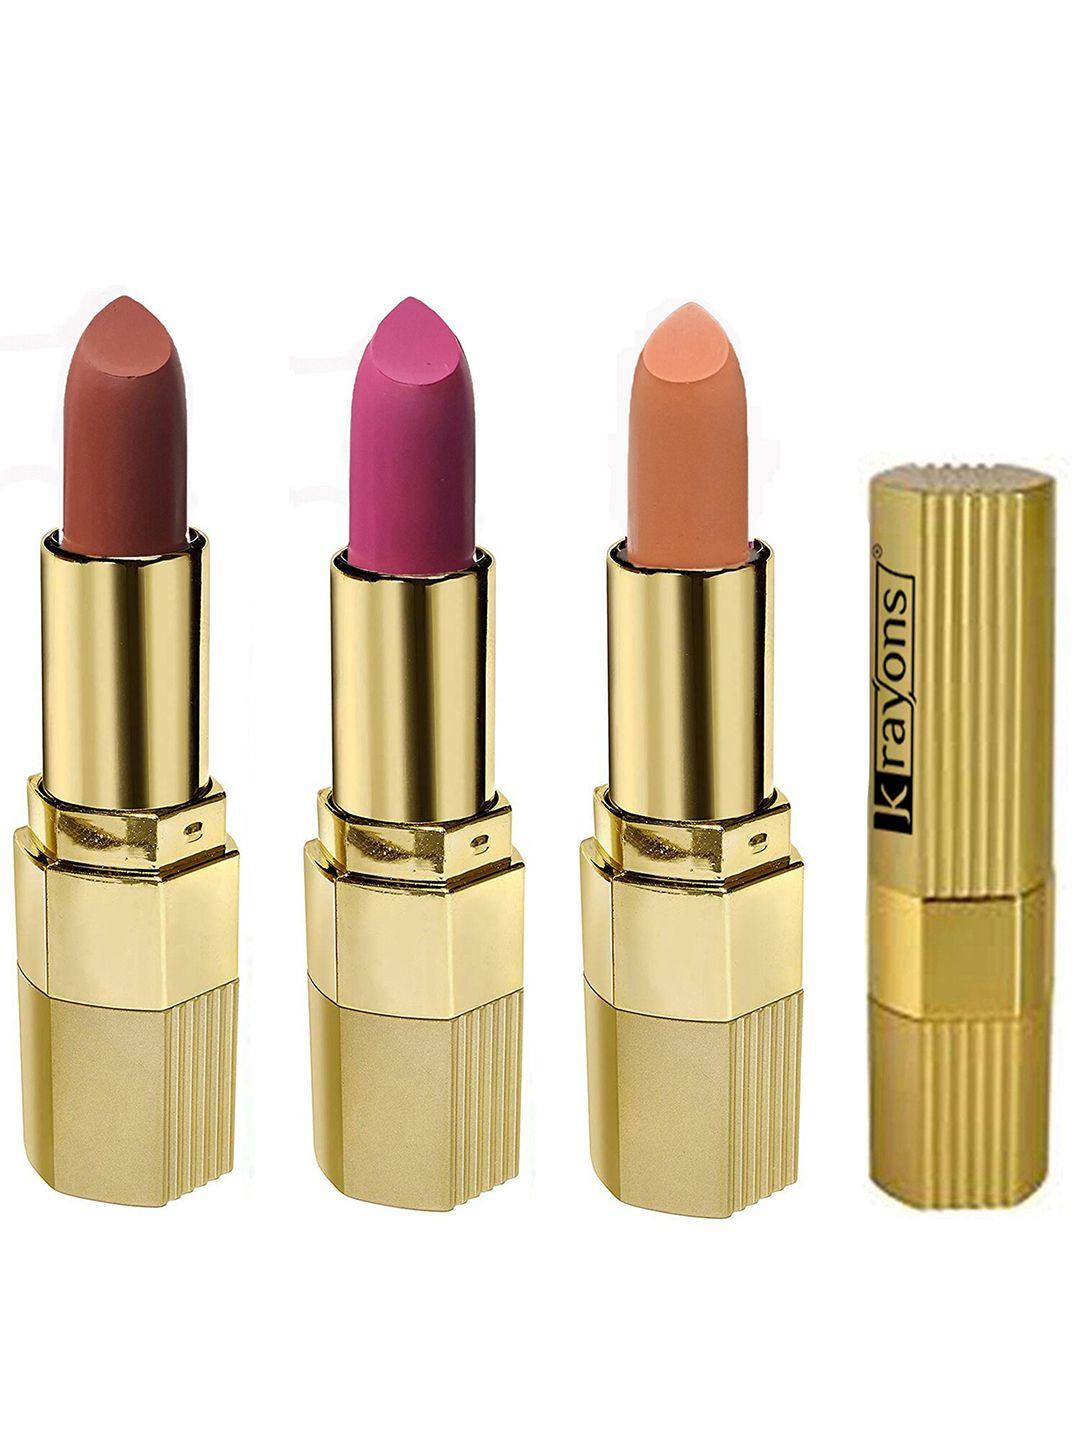 krayons set of 3 desire moisturizing & long-lasting matte lipstick - 3.5 g each